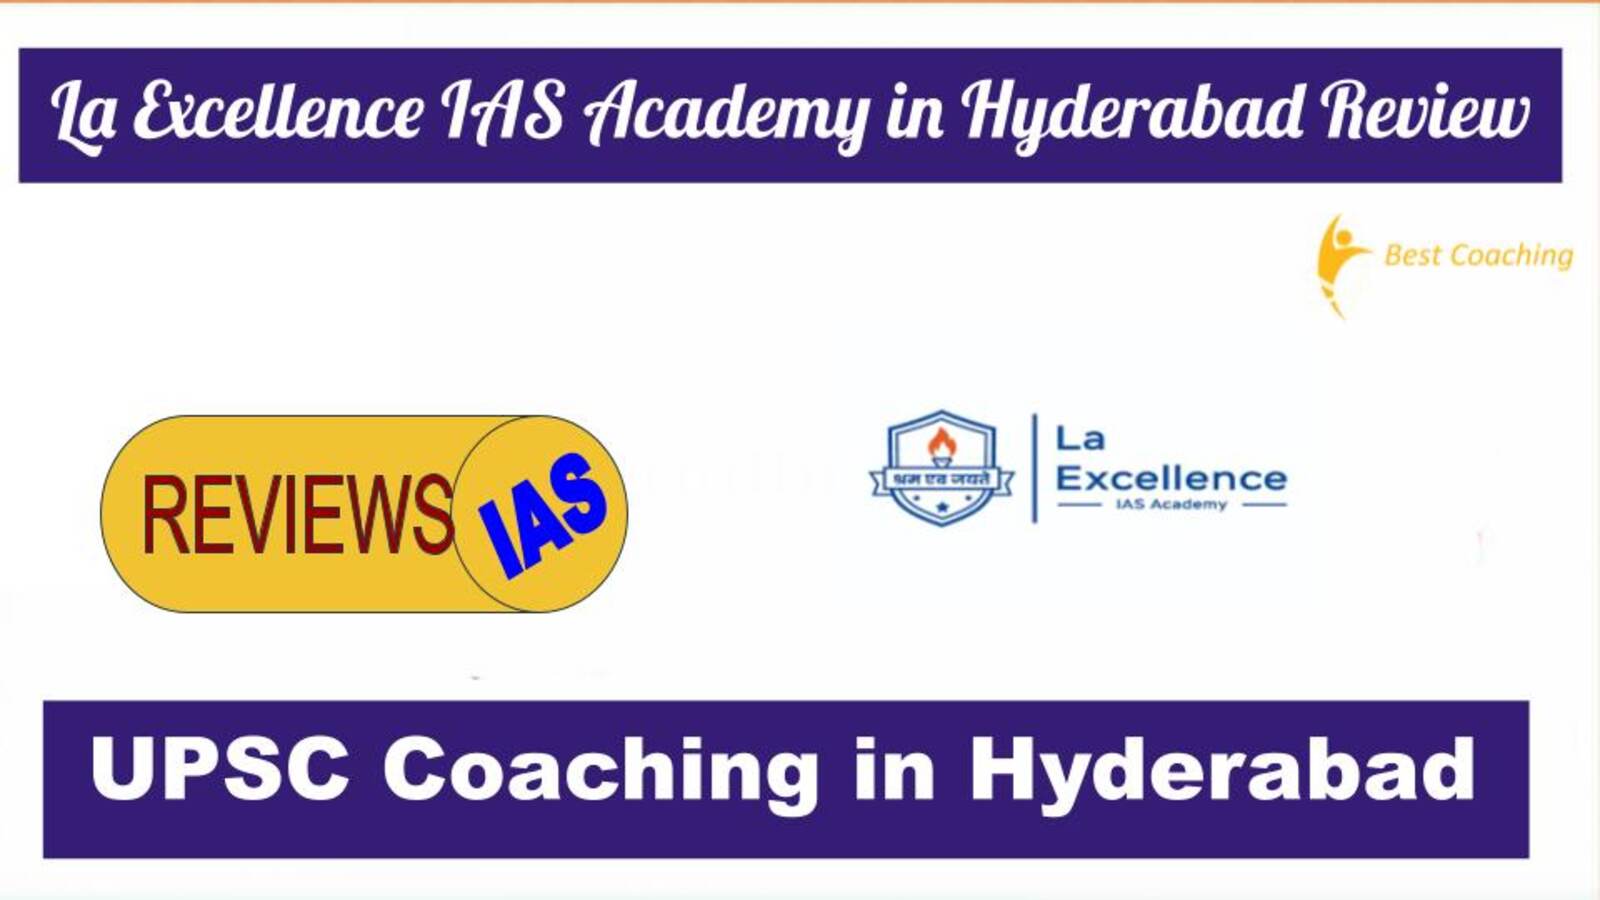 La Excellence IAS Academy Institute in Hyderabad